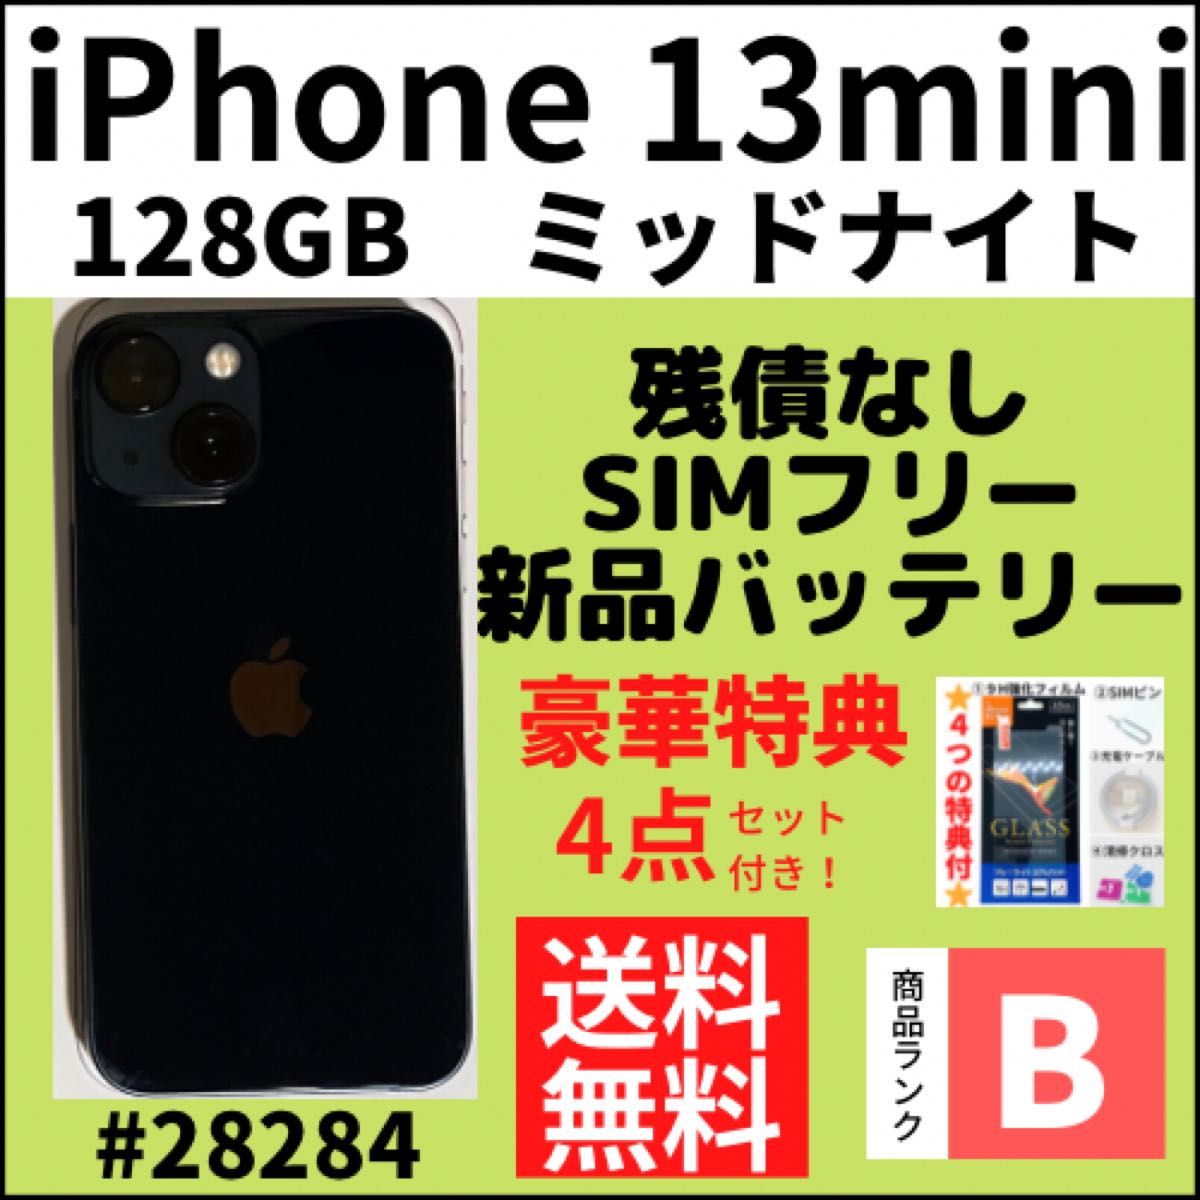 【B美品】iPhone13mini ミッドナイト 128GB SIMフリー 本体